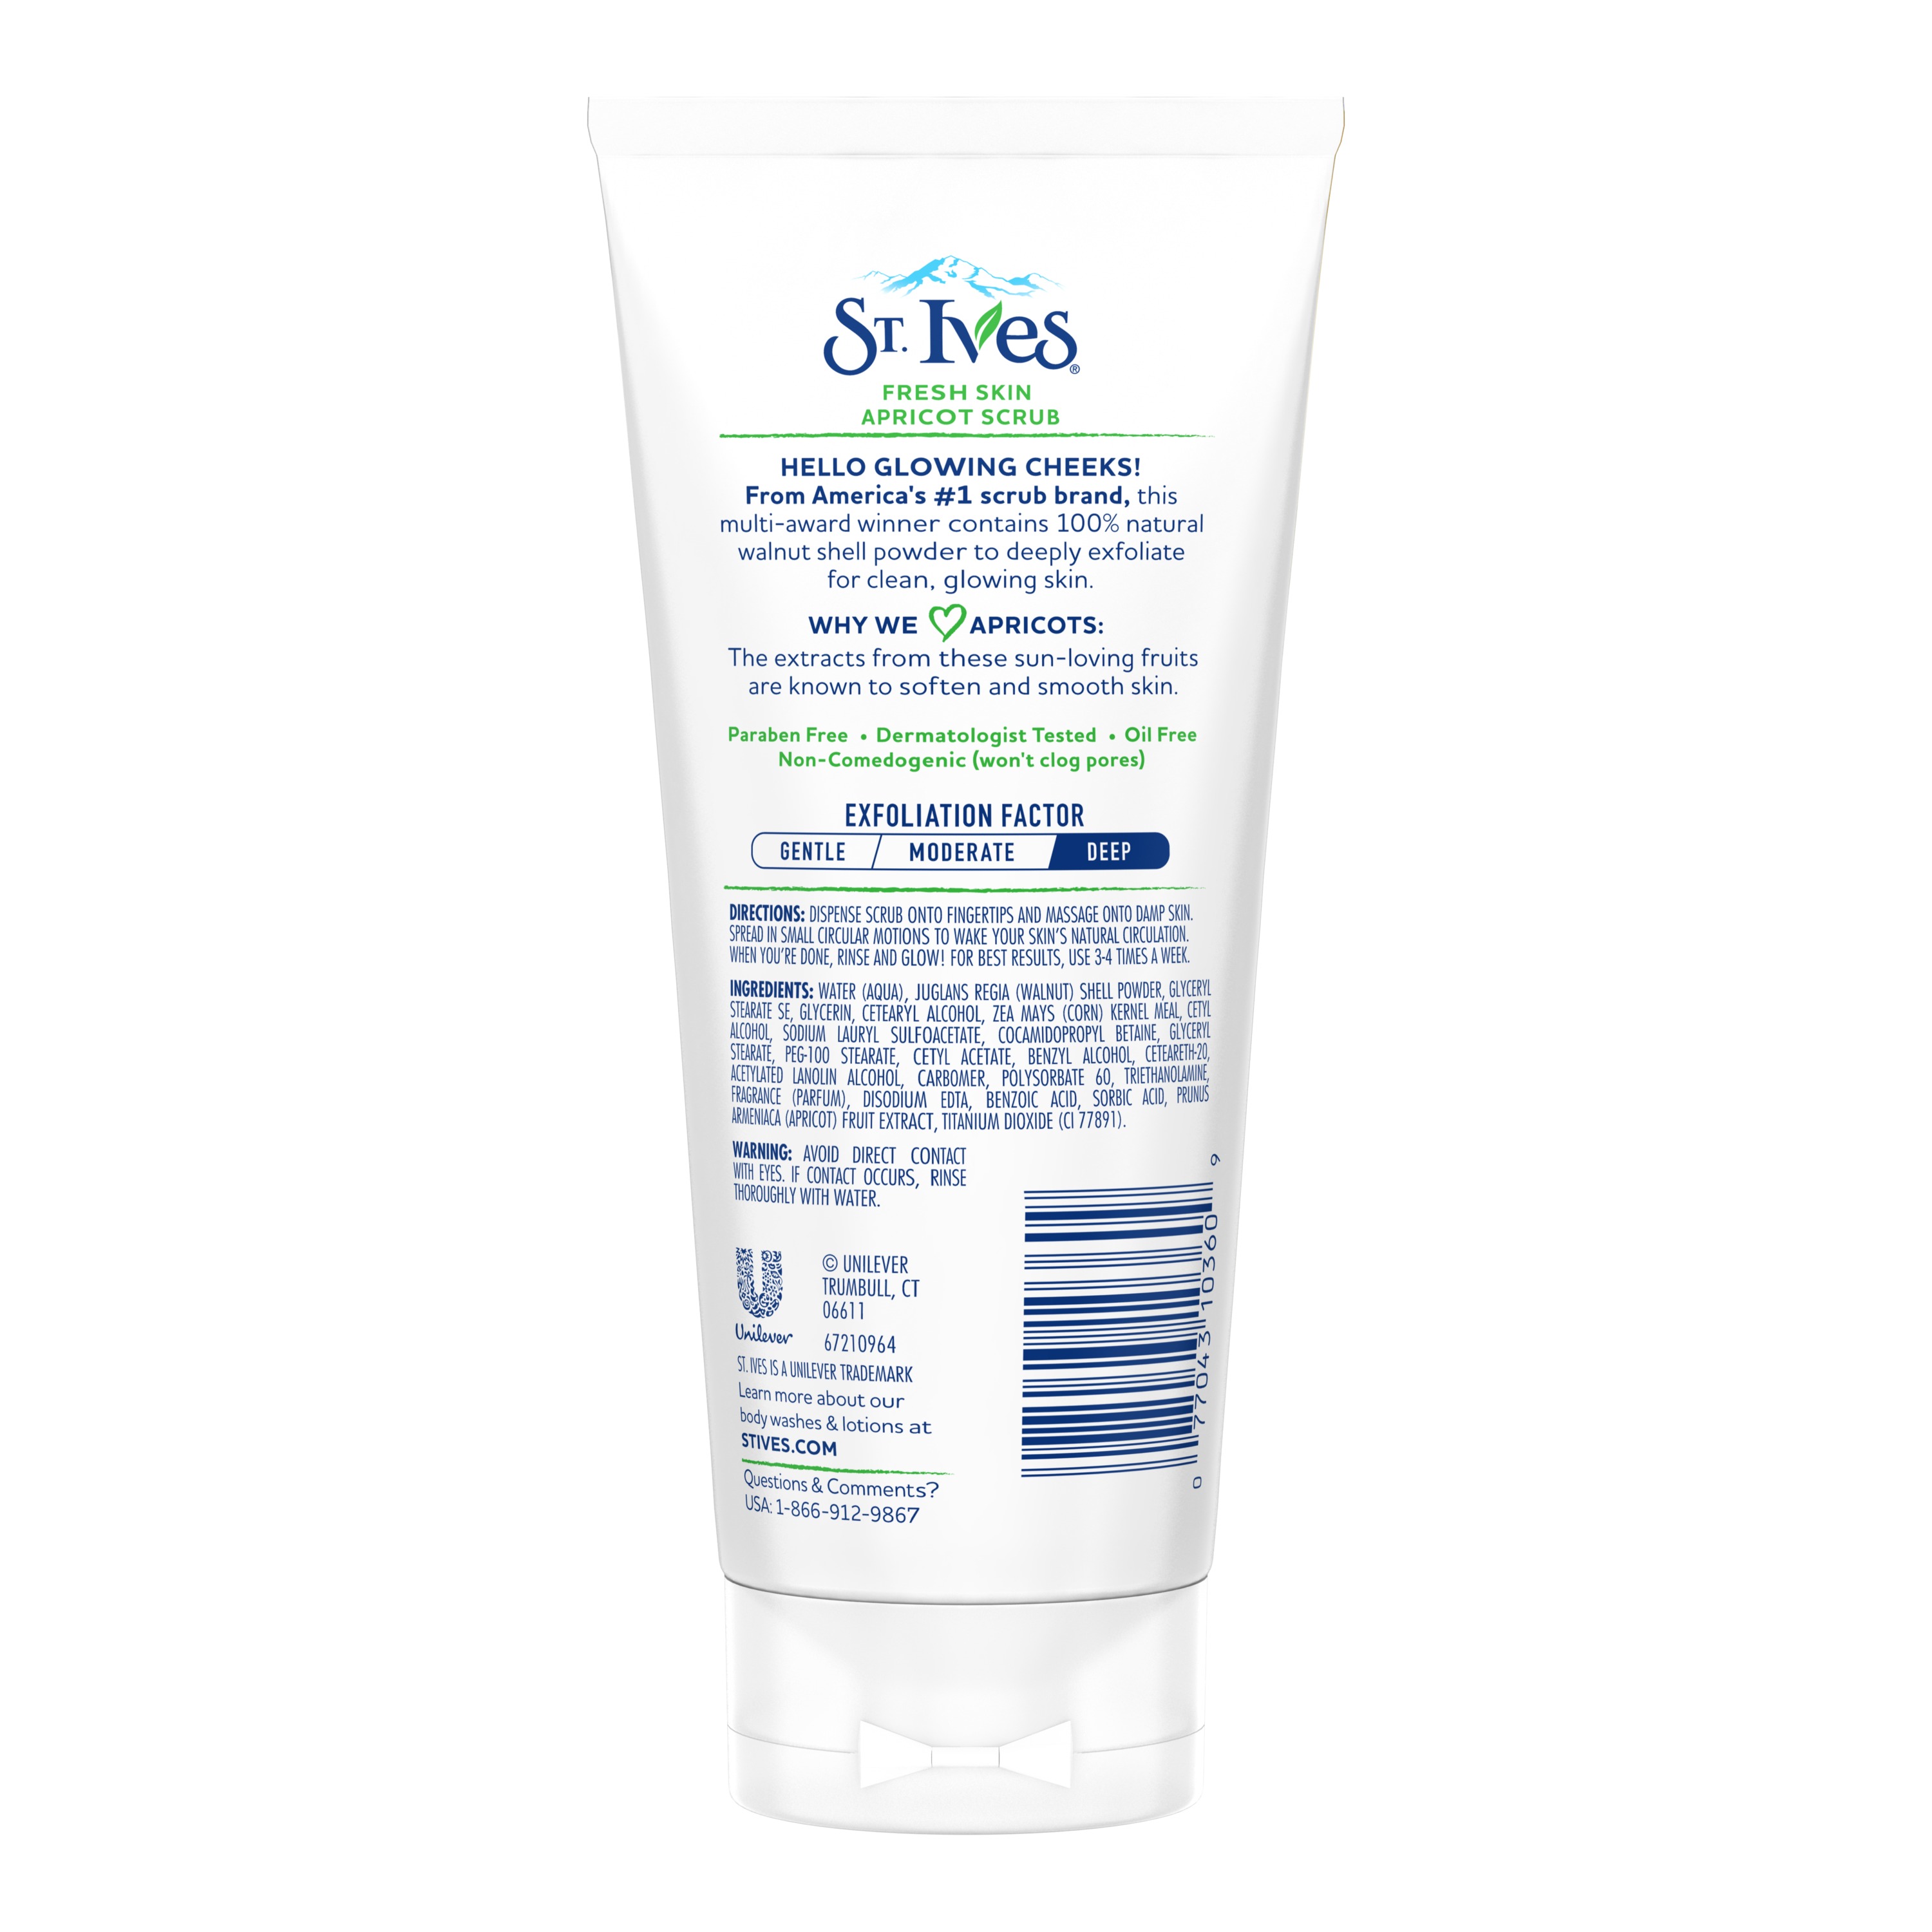 St. Ives Fresh Skin Face Scrub Apricot 6 oz - image 4 of 12